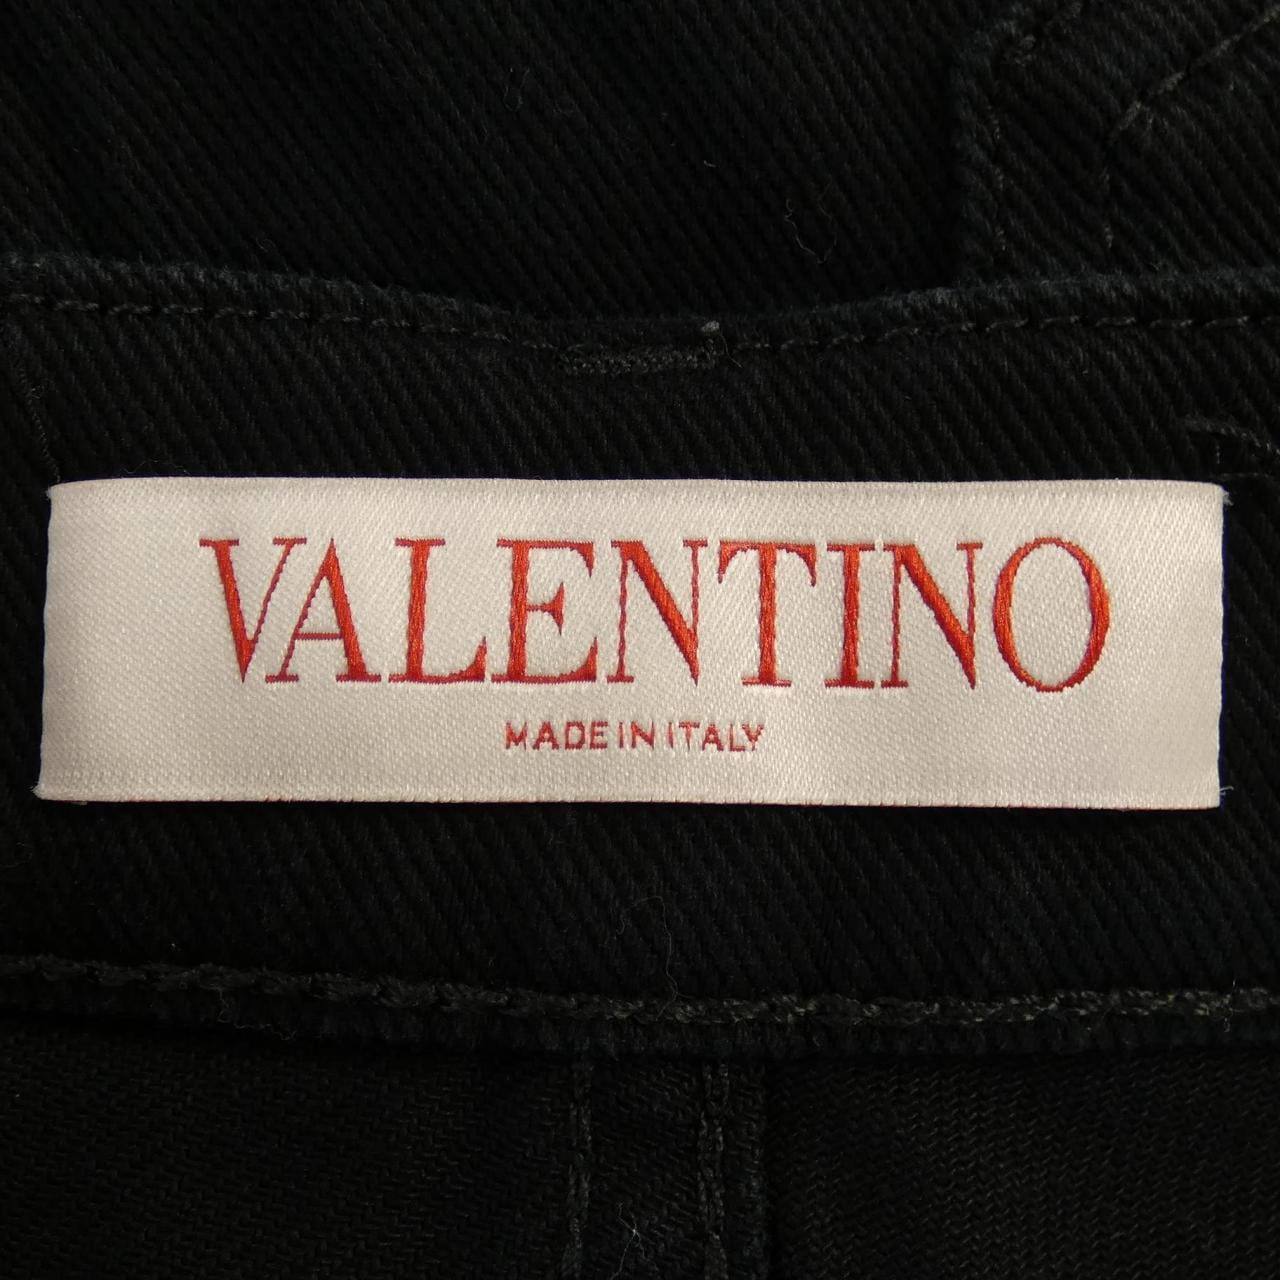 VALENTINO VALENTINO jeans